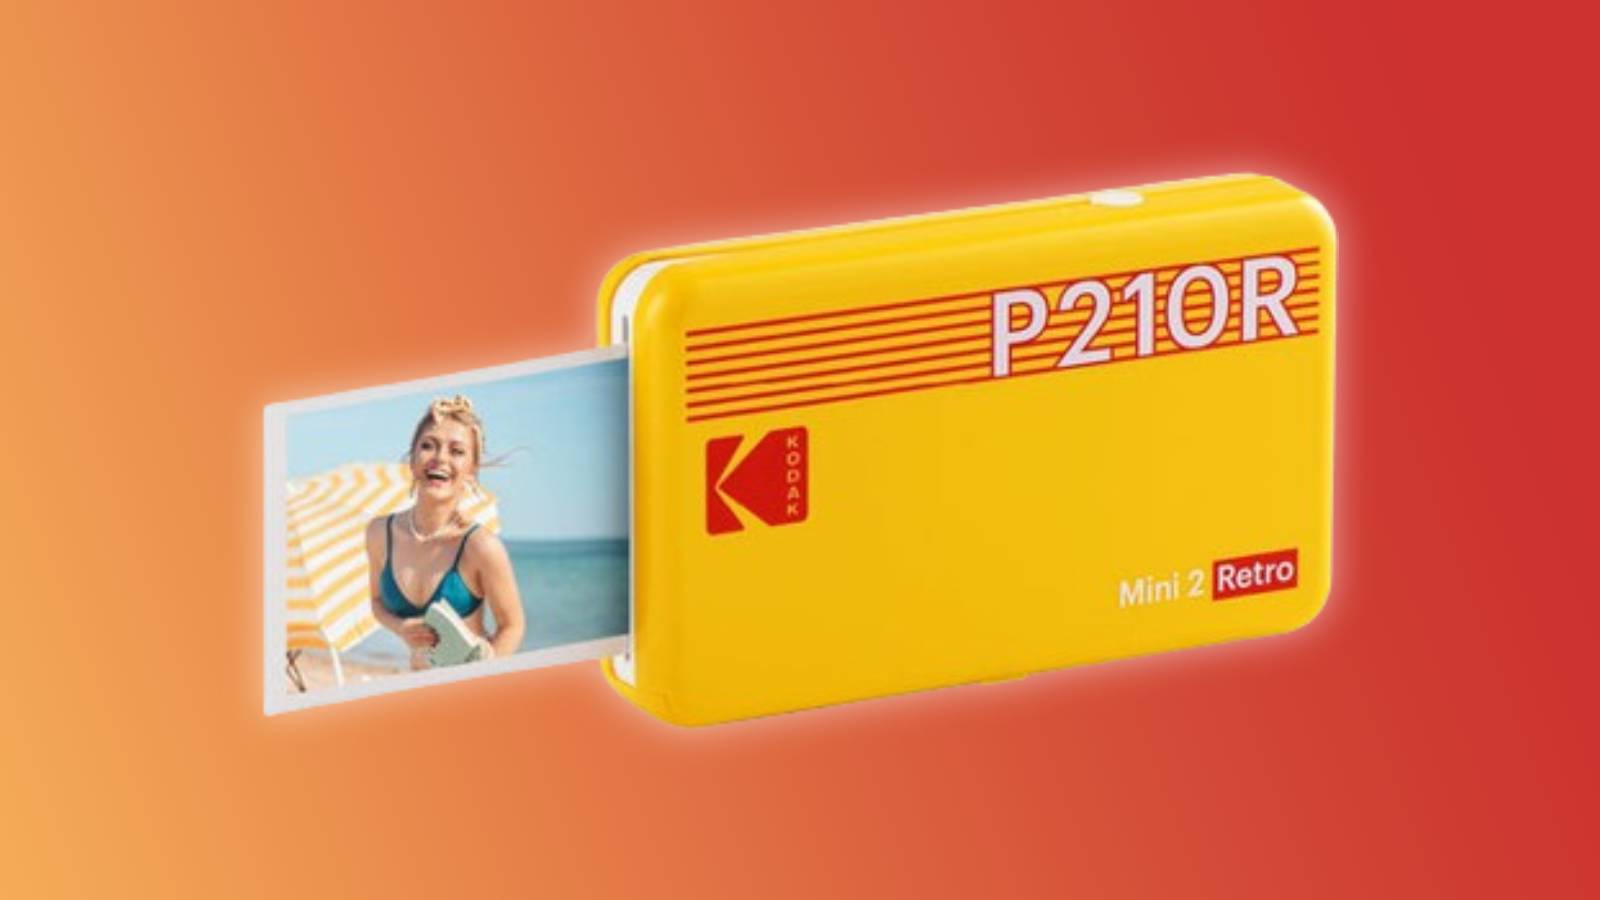 Image of the KODAK Mini 2 Retro 4PASS Portable Photo Printer on an orange and yellow background.